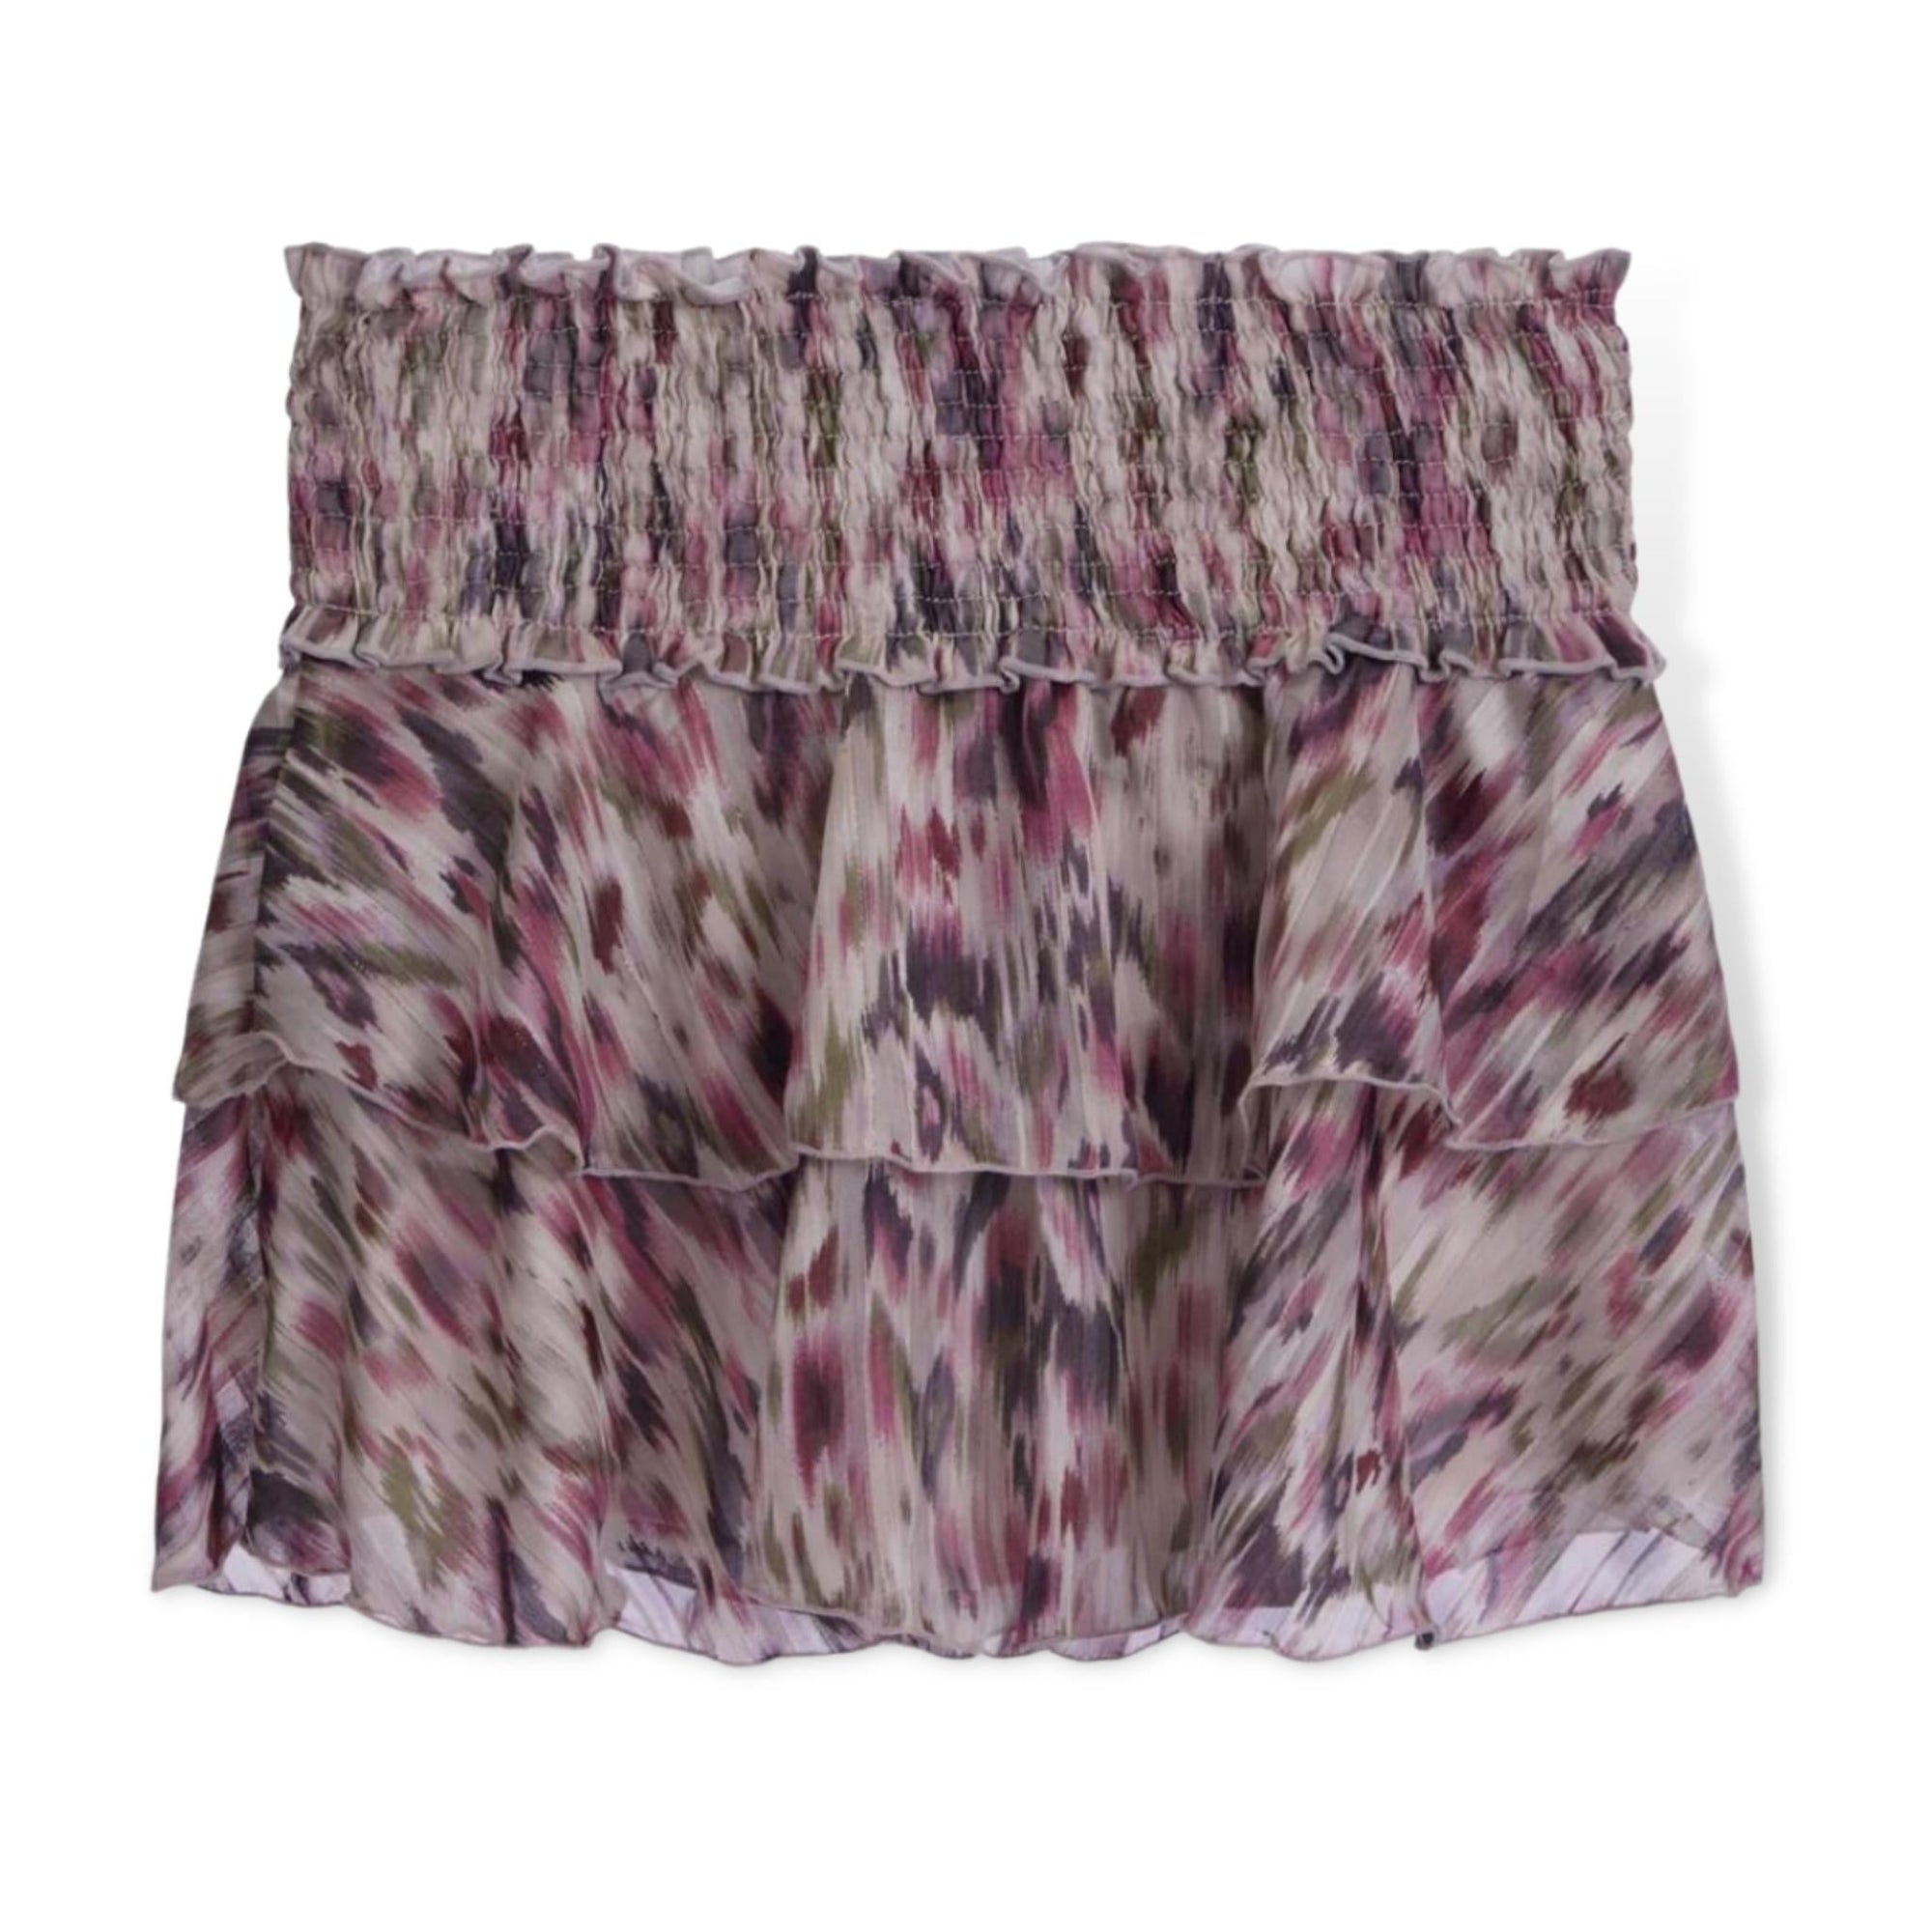 Flowers by Zoe Burgundy Aztec Chiff Skirt - a Spirit Animal - Skirt $60-$90 active Aug 2022 bottoms